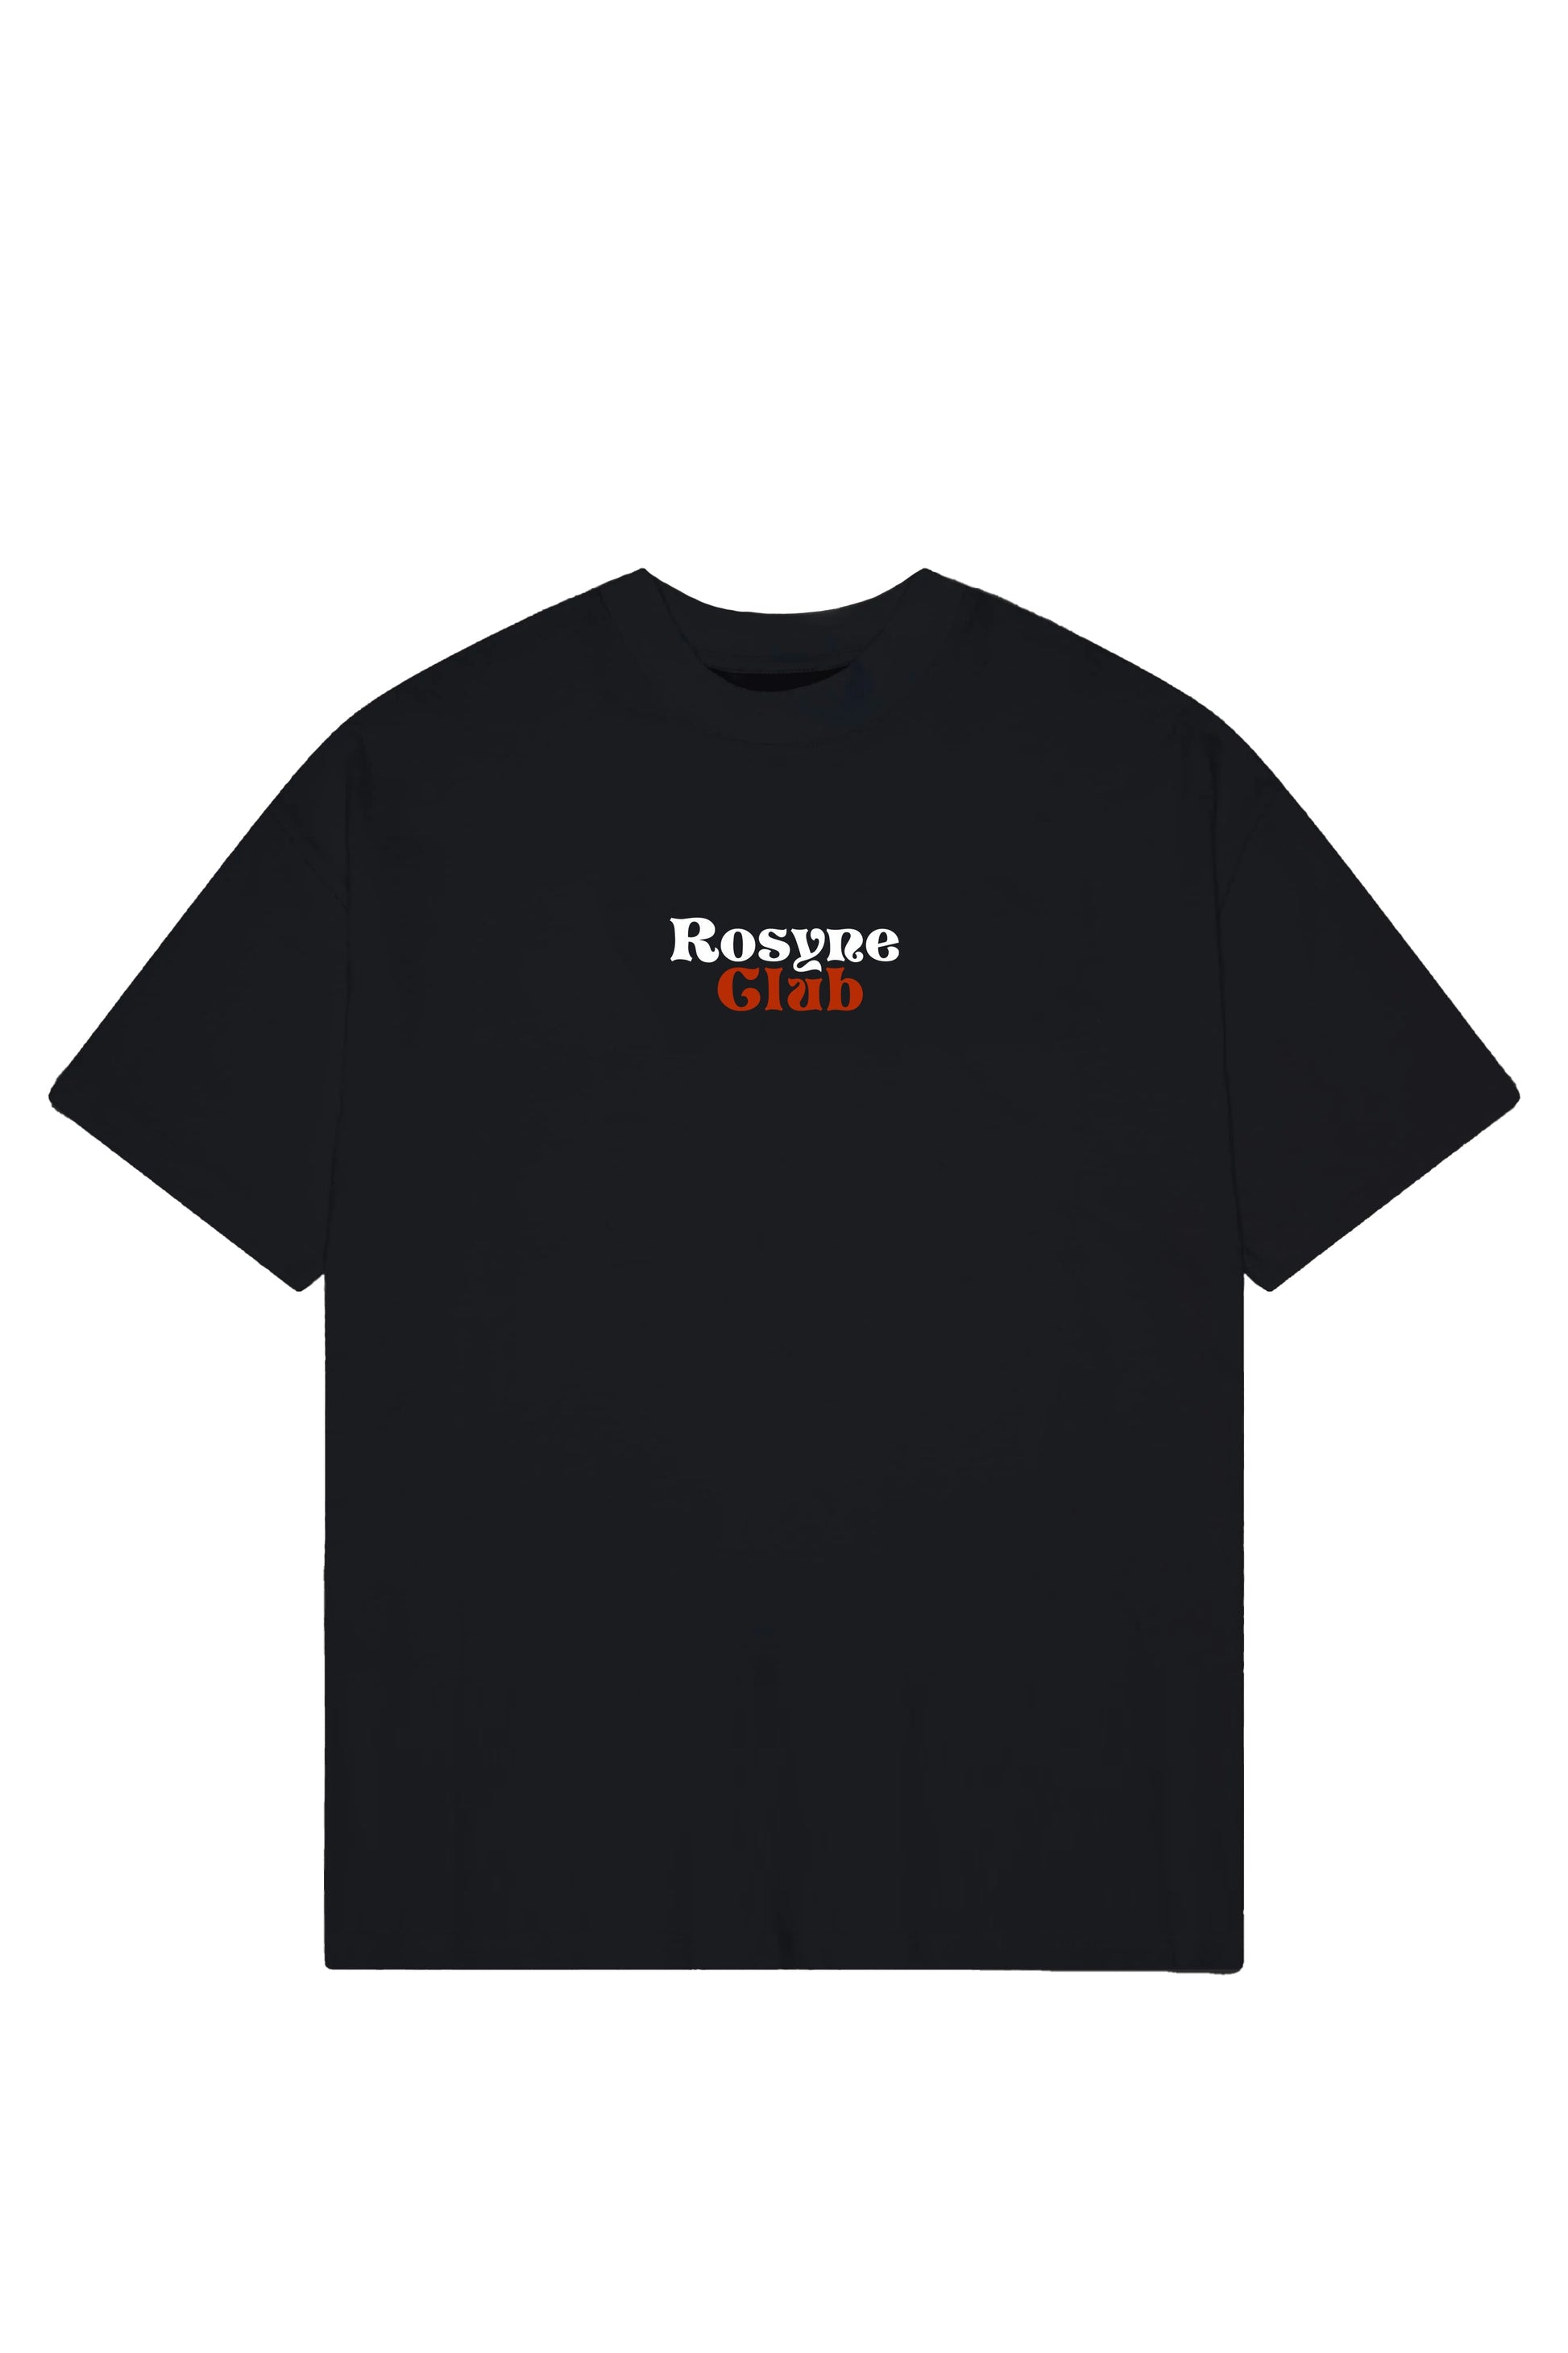 T-shirt Black Picasso Black - Oversize - Rosyne Club